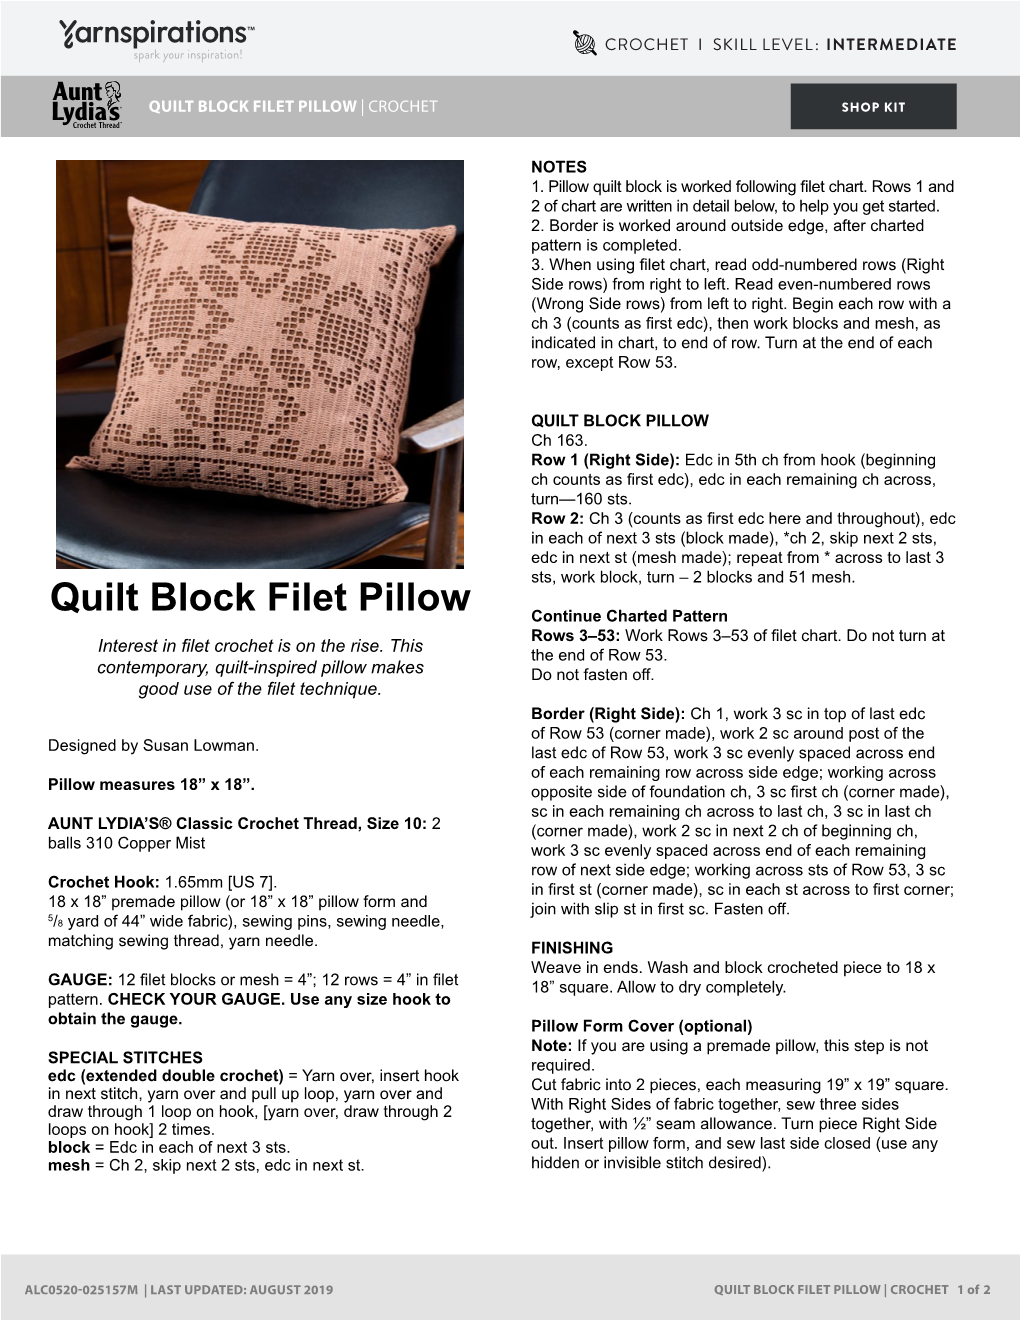 Quilt Block Filet Pillow | Crochet Shop Kit